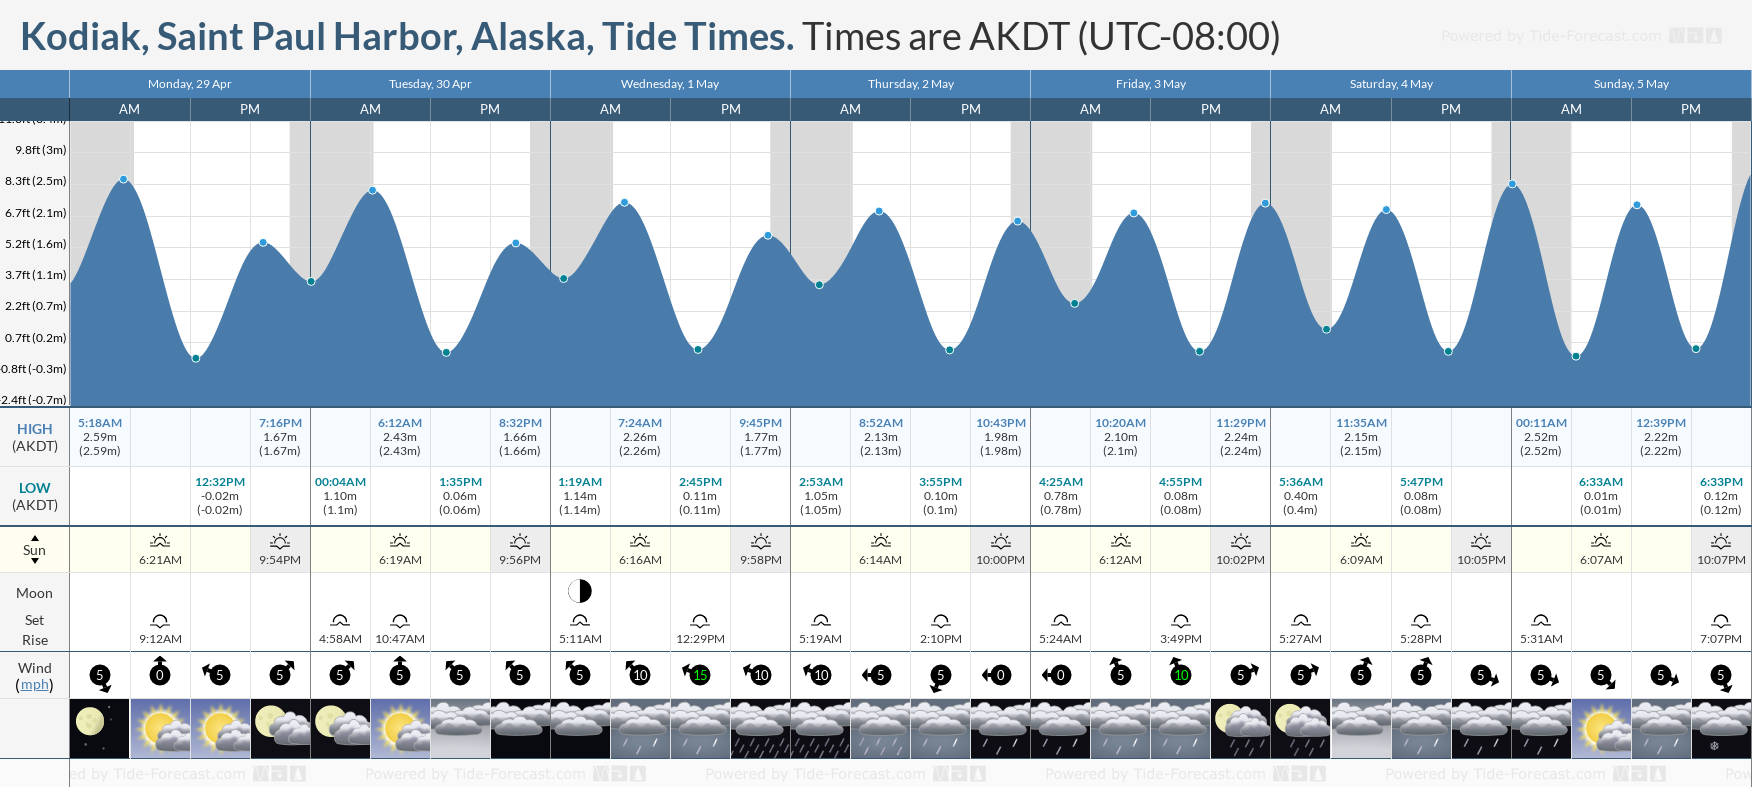 Kodiak, Saint Paul Harbor, Alaska Tide Chart including high and low tide tide times for the next 7 days